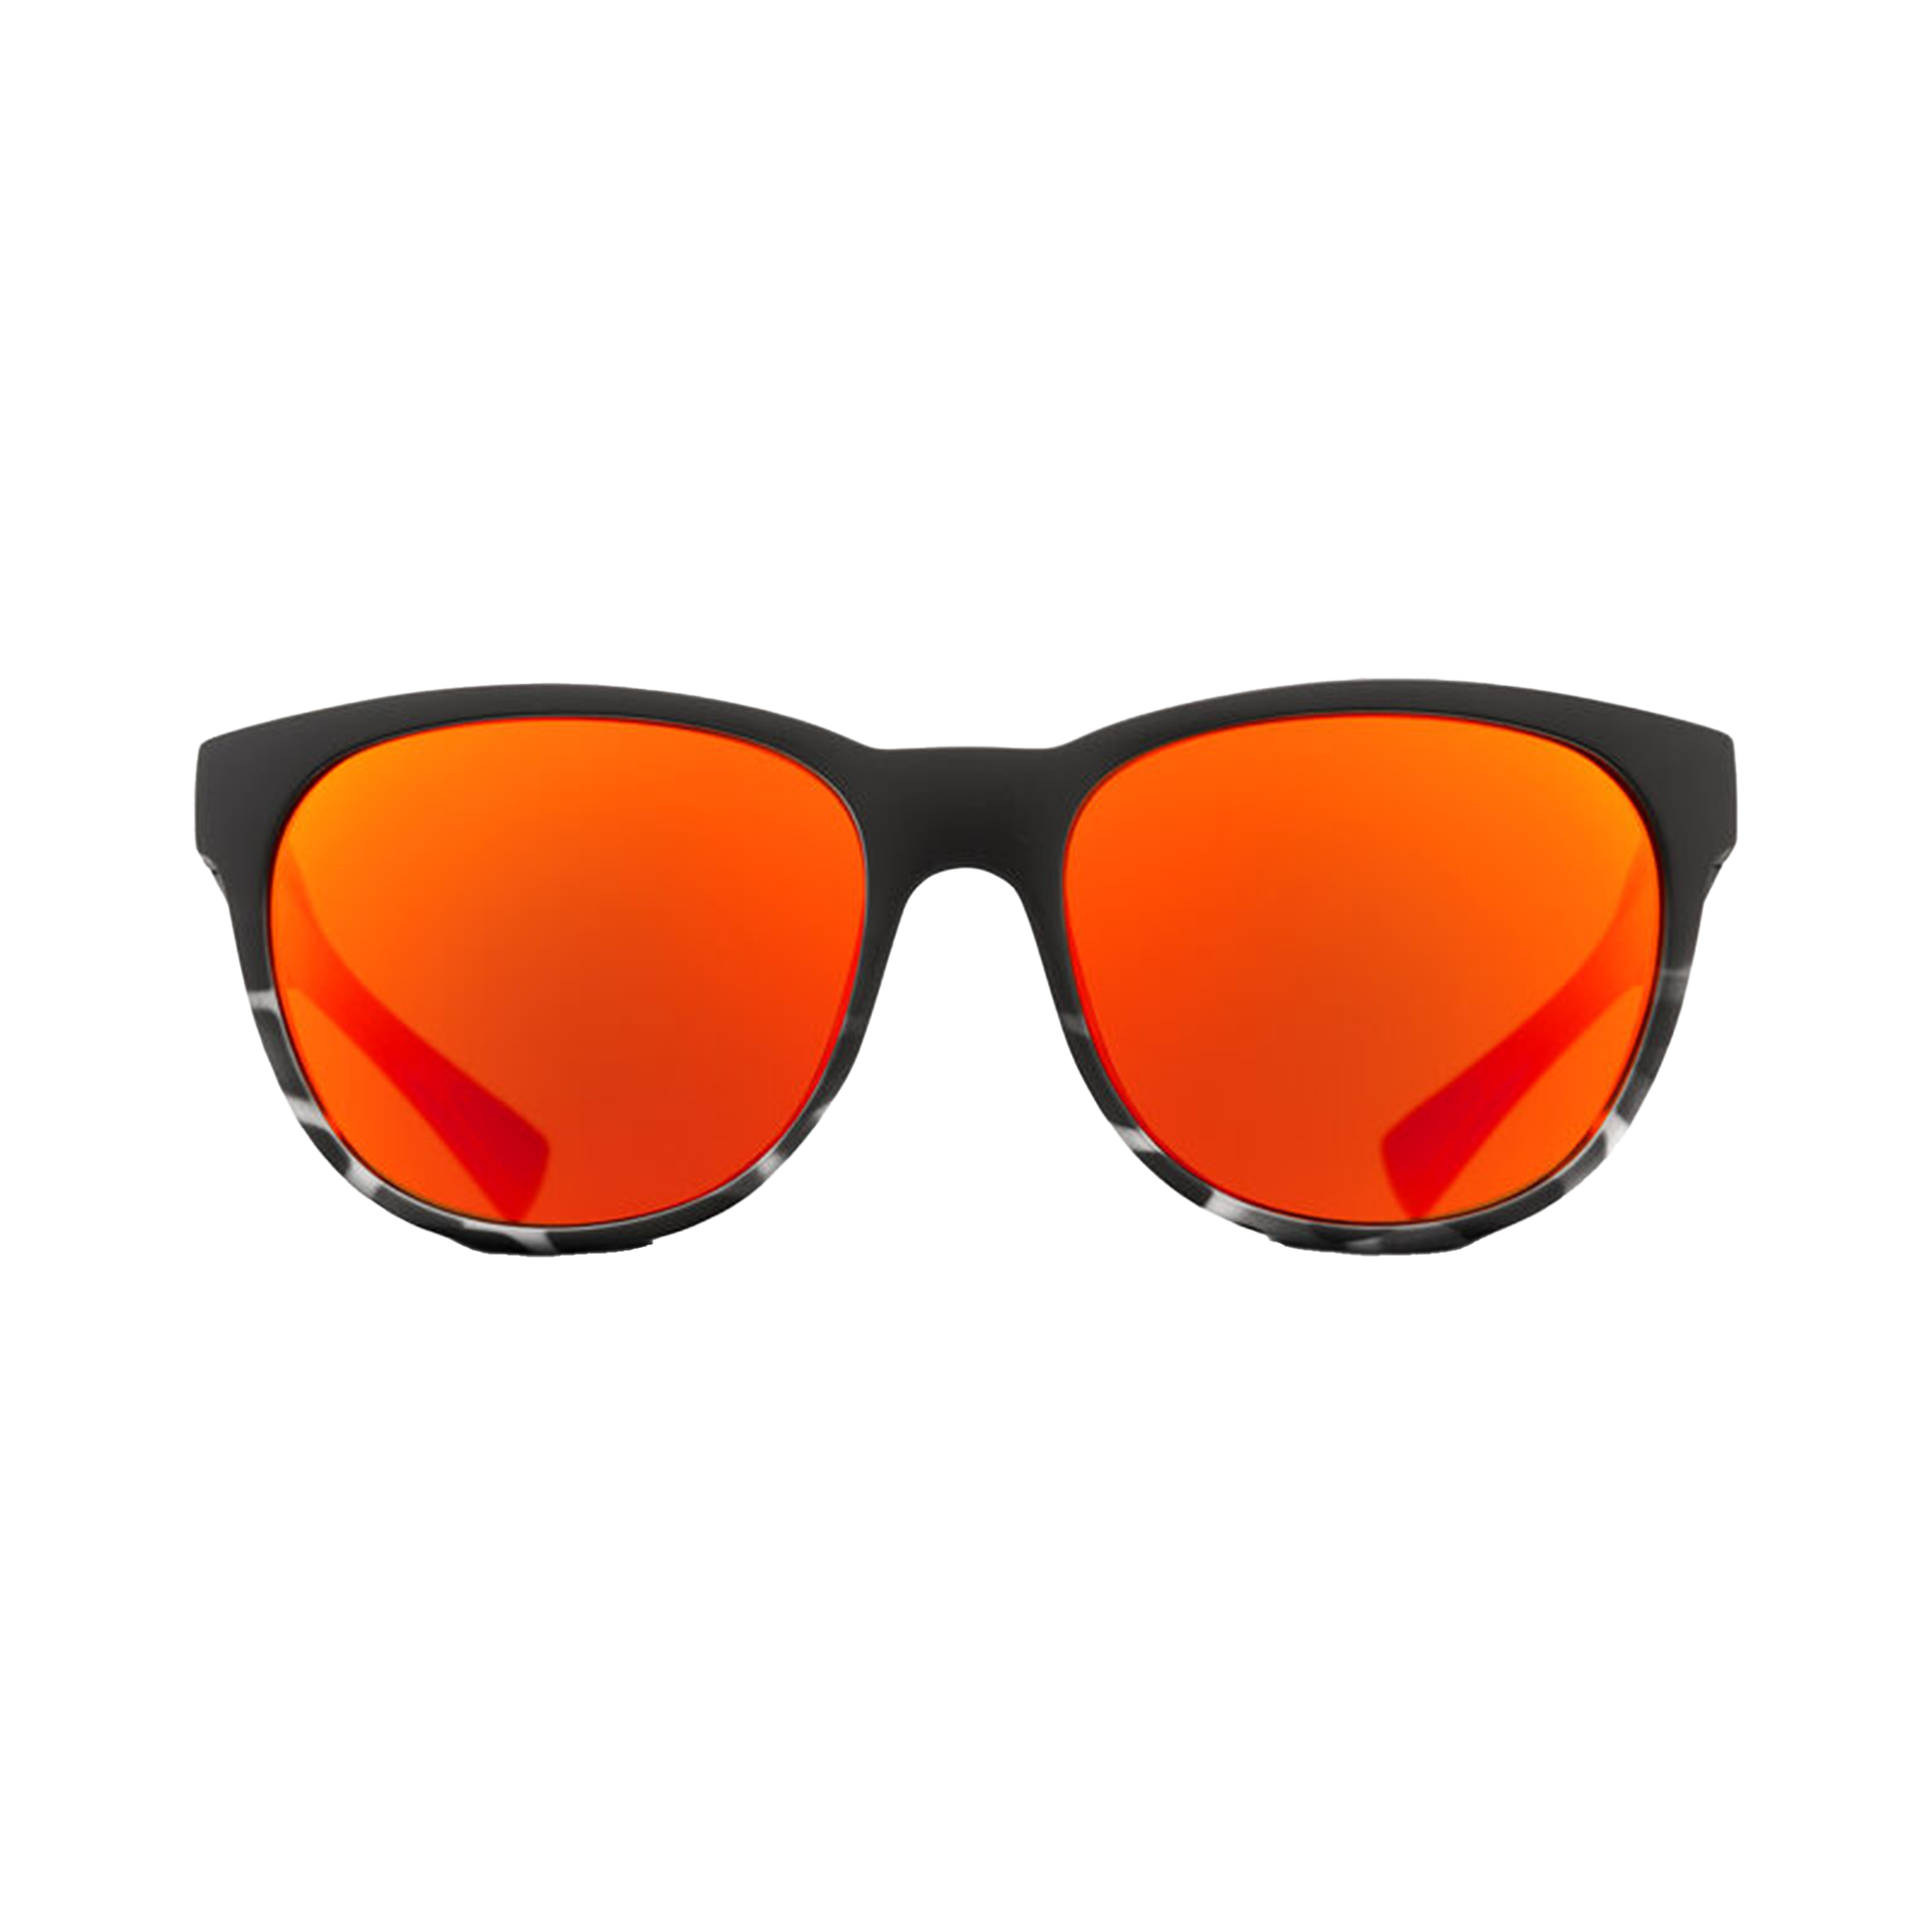 Giro Lupra Sunglasses Matte Black Tortoise Fade VIVID Ember Sunglasses